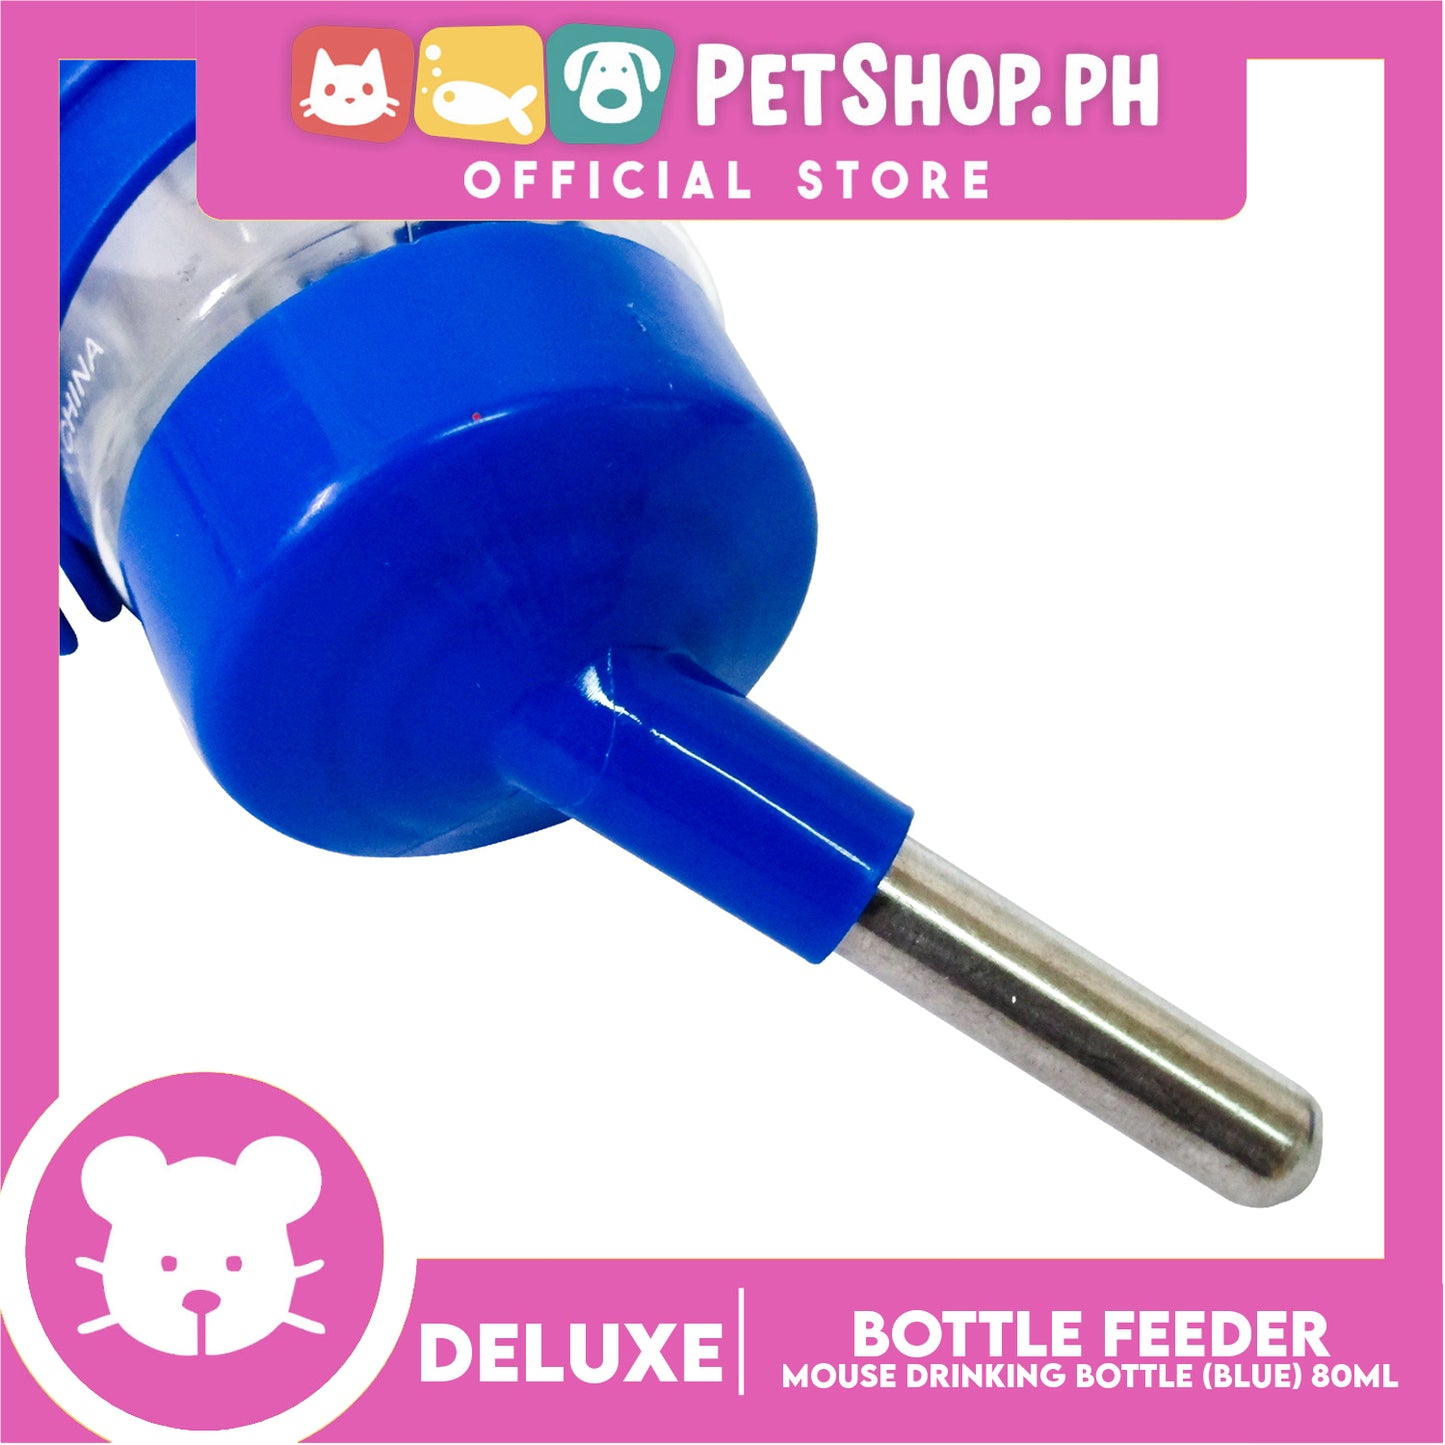 Deluxe Mouse Drinking Bottle Blue 80ml